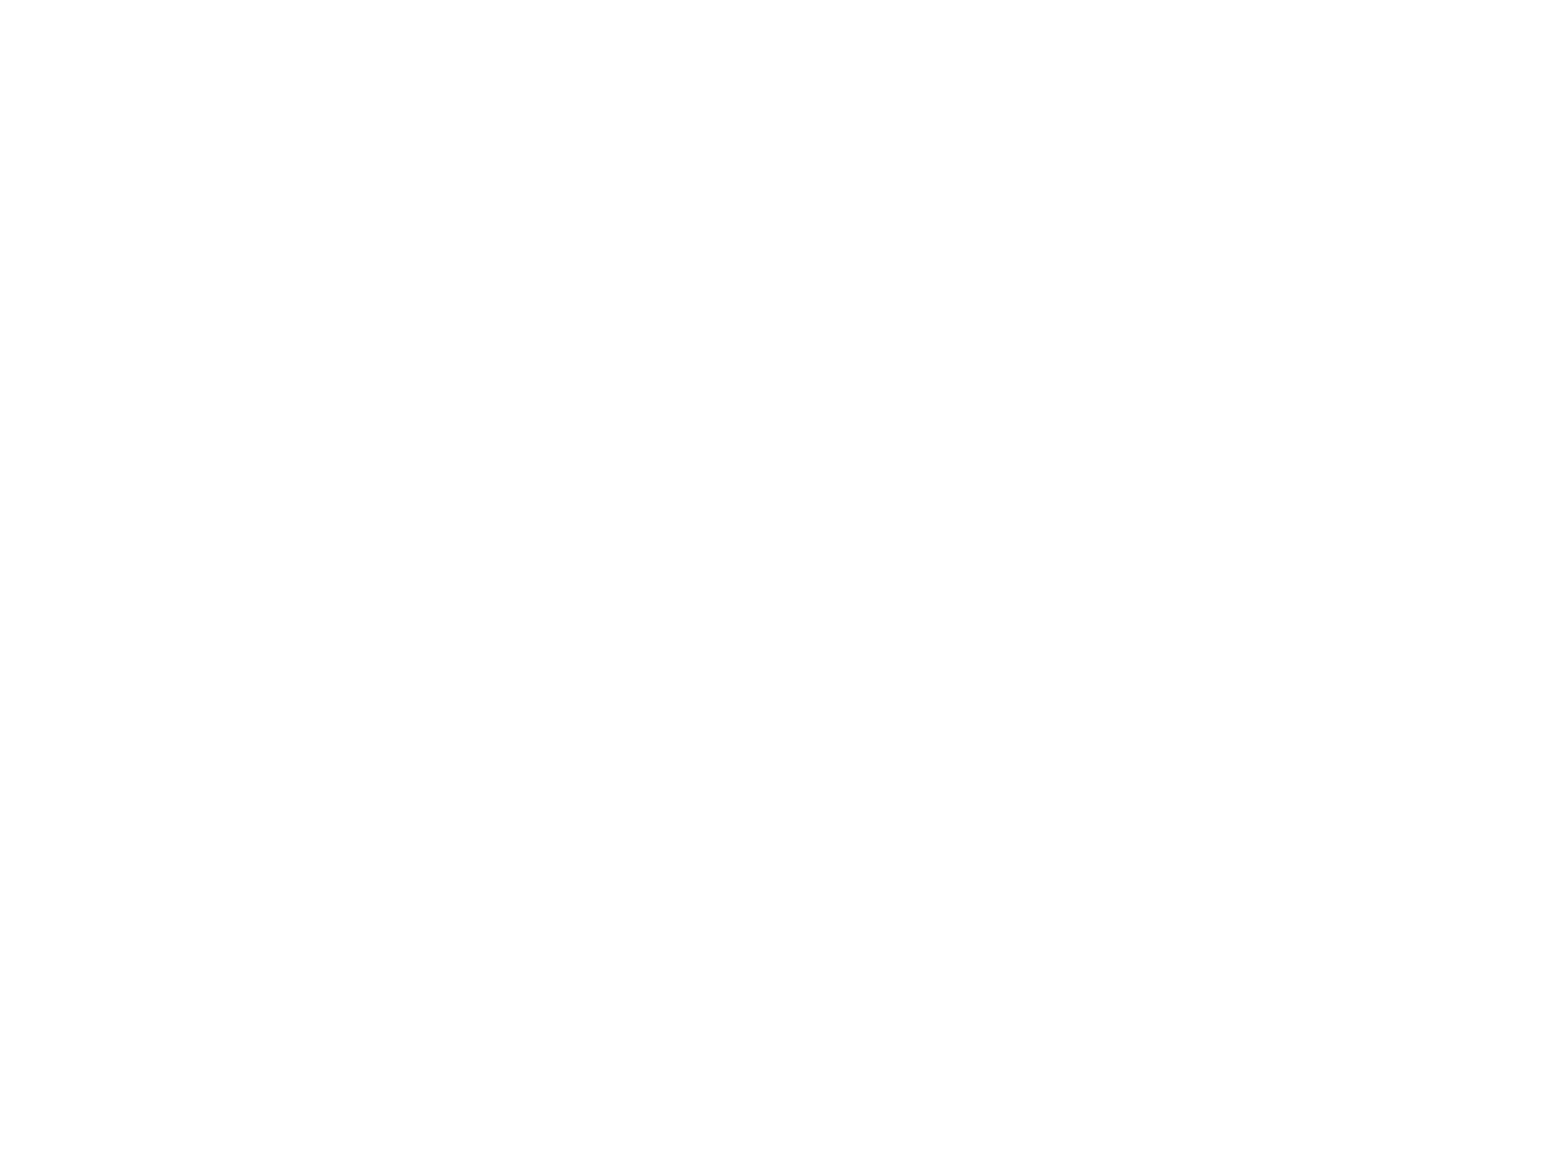 Aldrees Petroleum and Transport Services logo for dark backgrounds (transparent PNG)